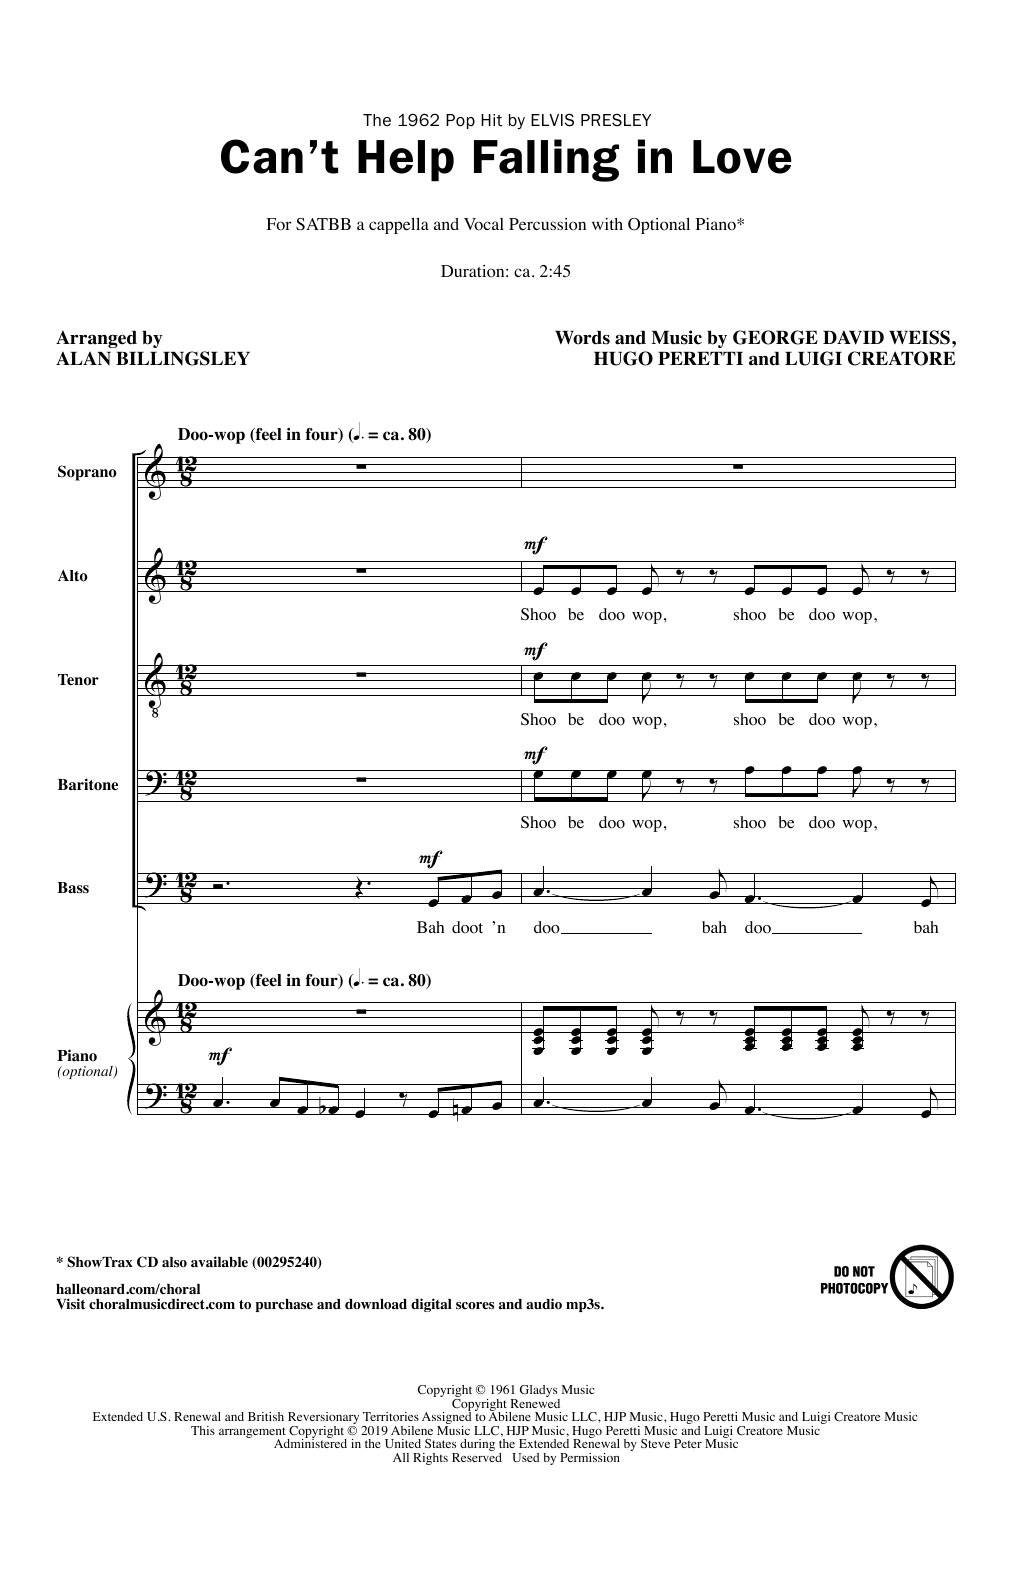 Elvis Presley Can't Help Falling In Love (arr. Alan Billingsley) Sheet Music Notes & Chords for SATB Choir - Download or Print PDF